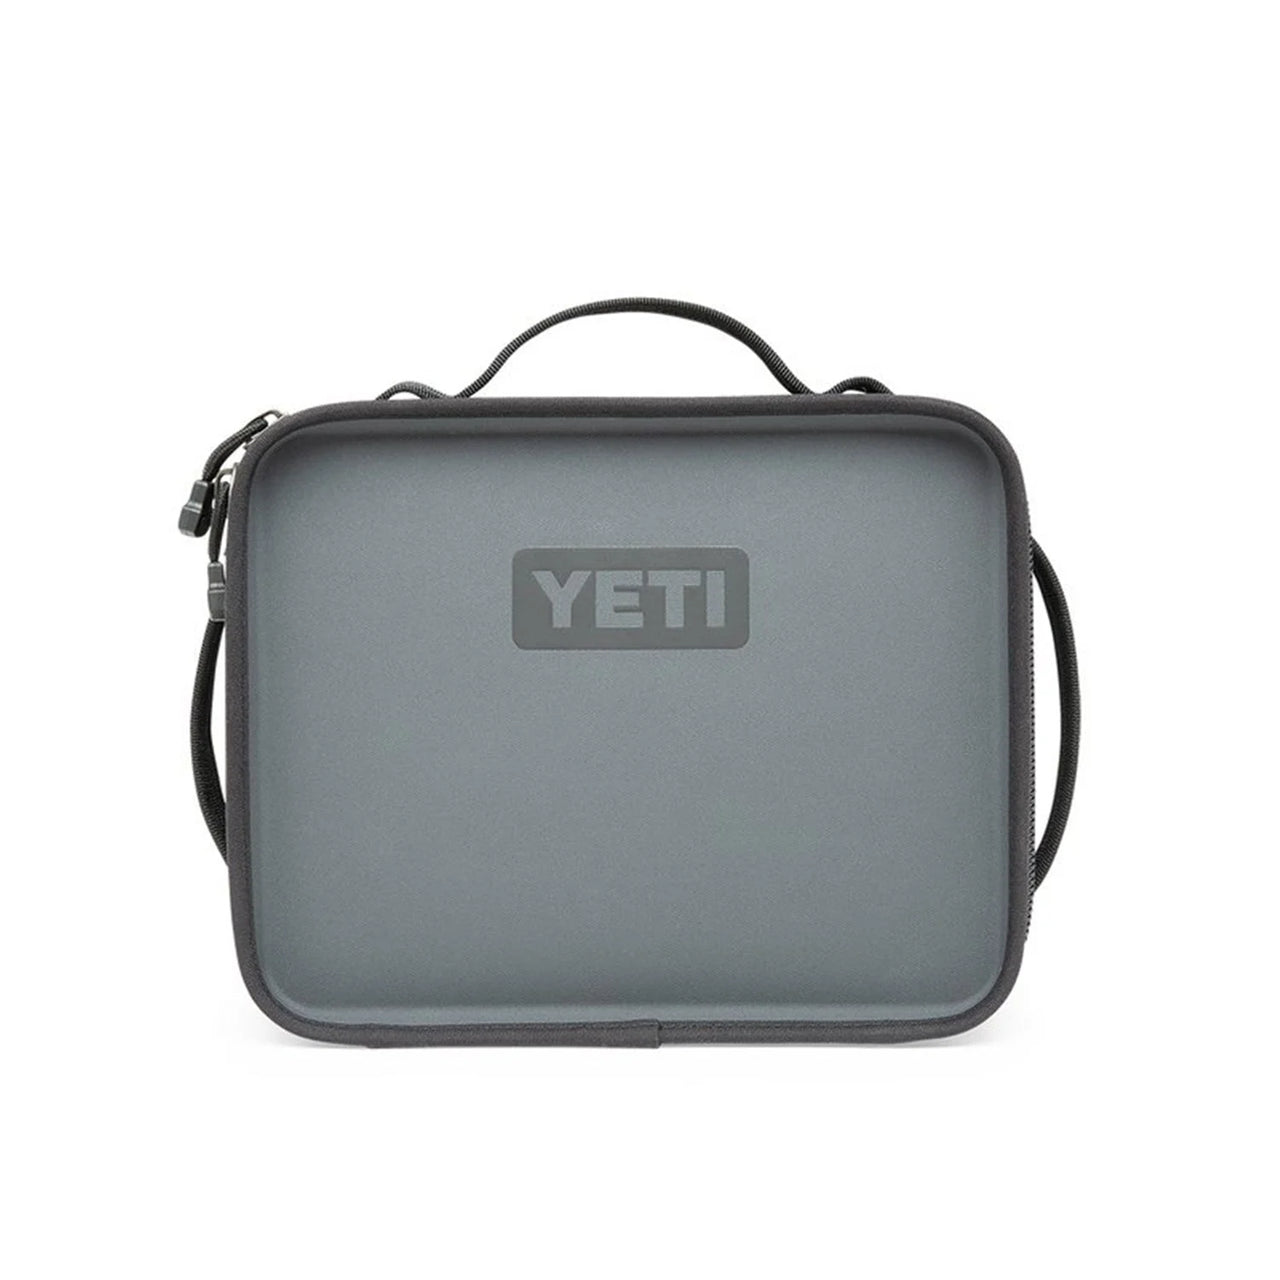 YETI - Day Trip Lunch Box